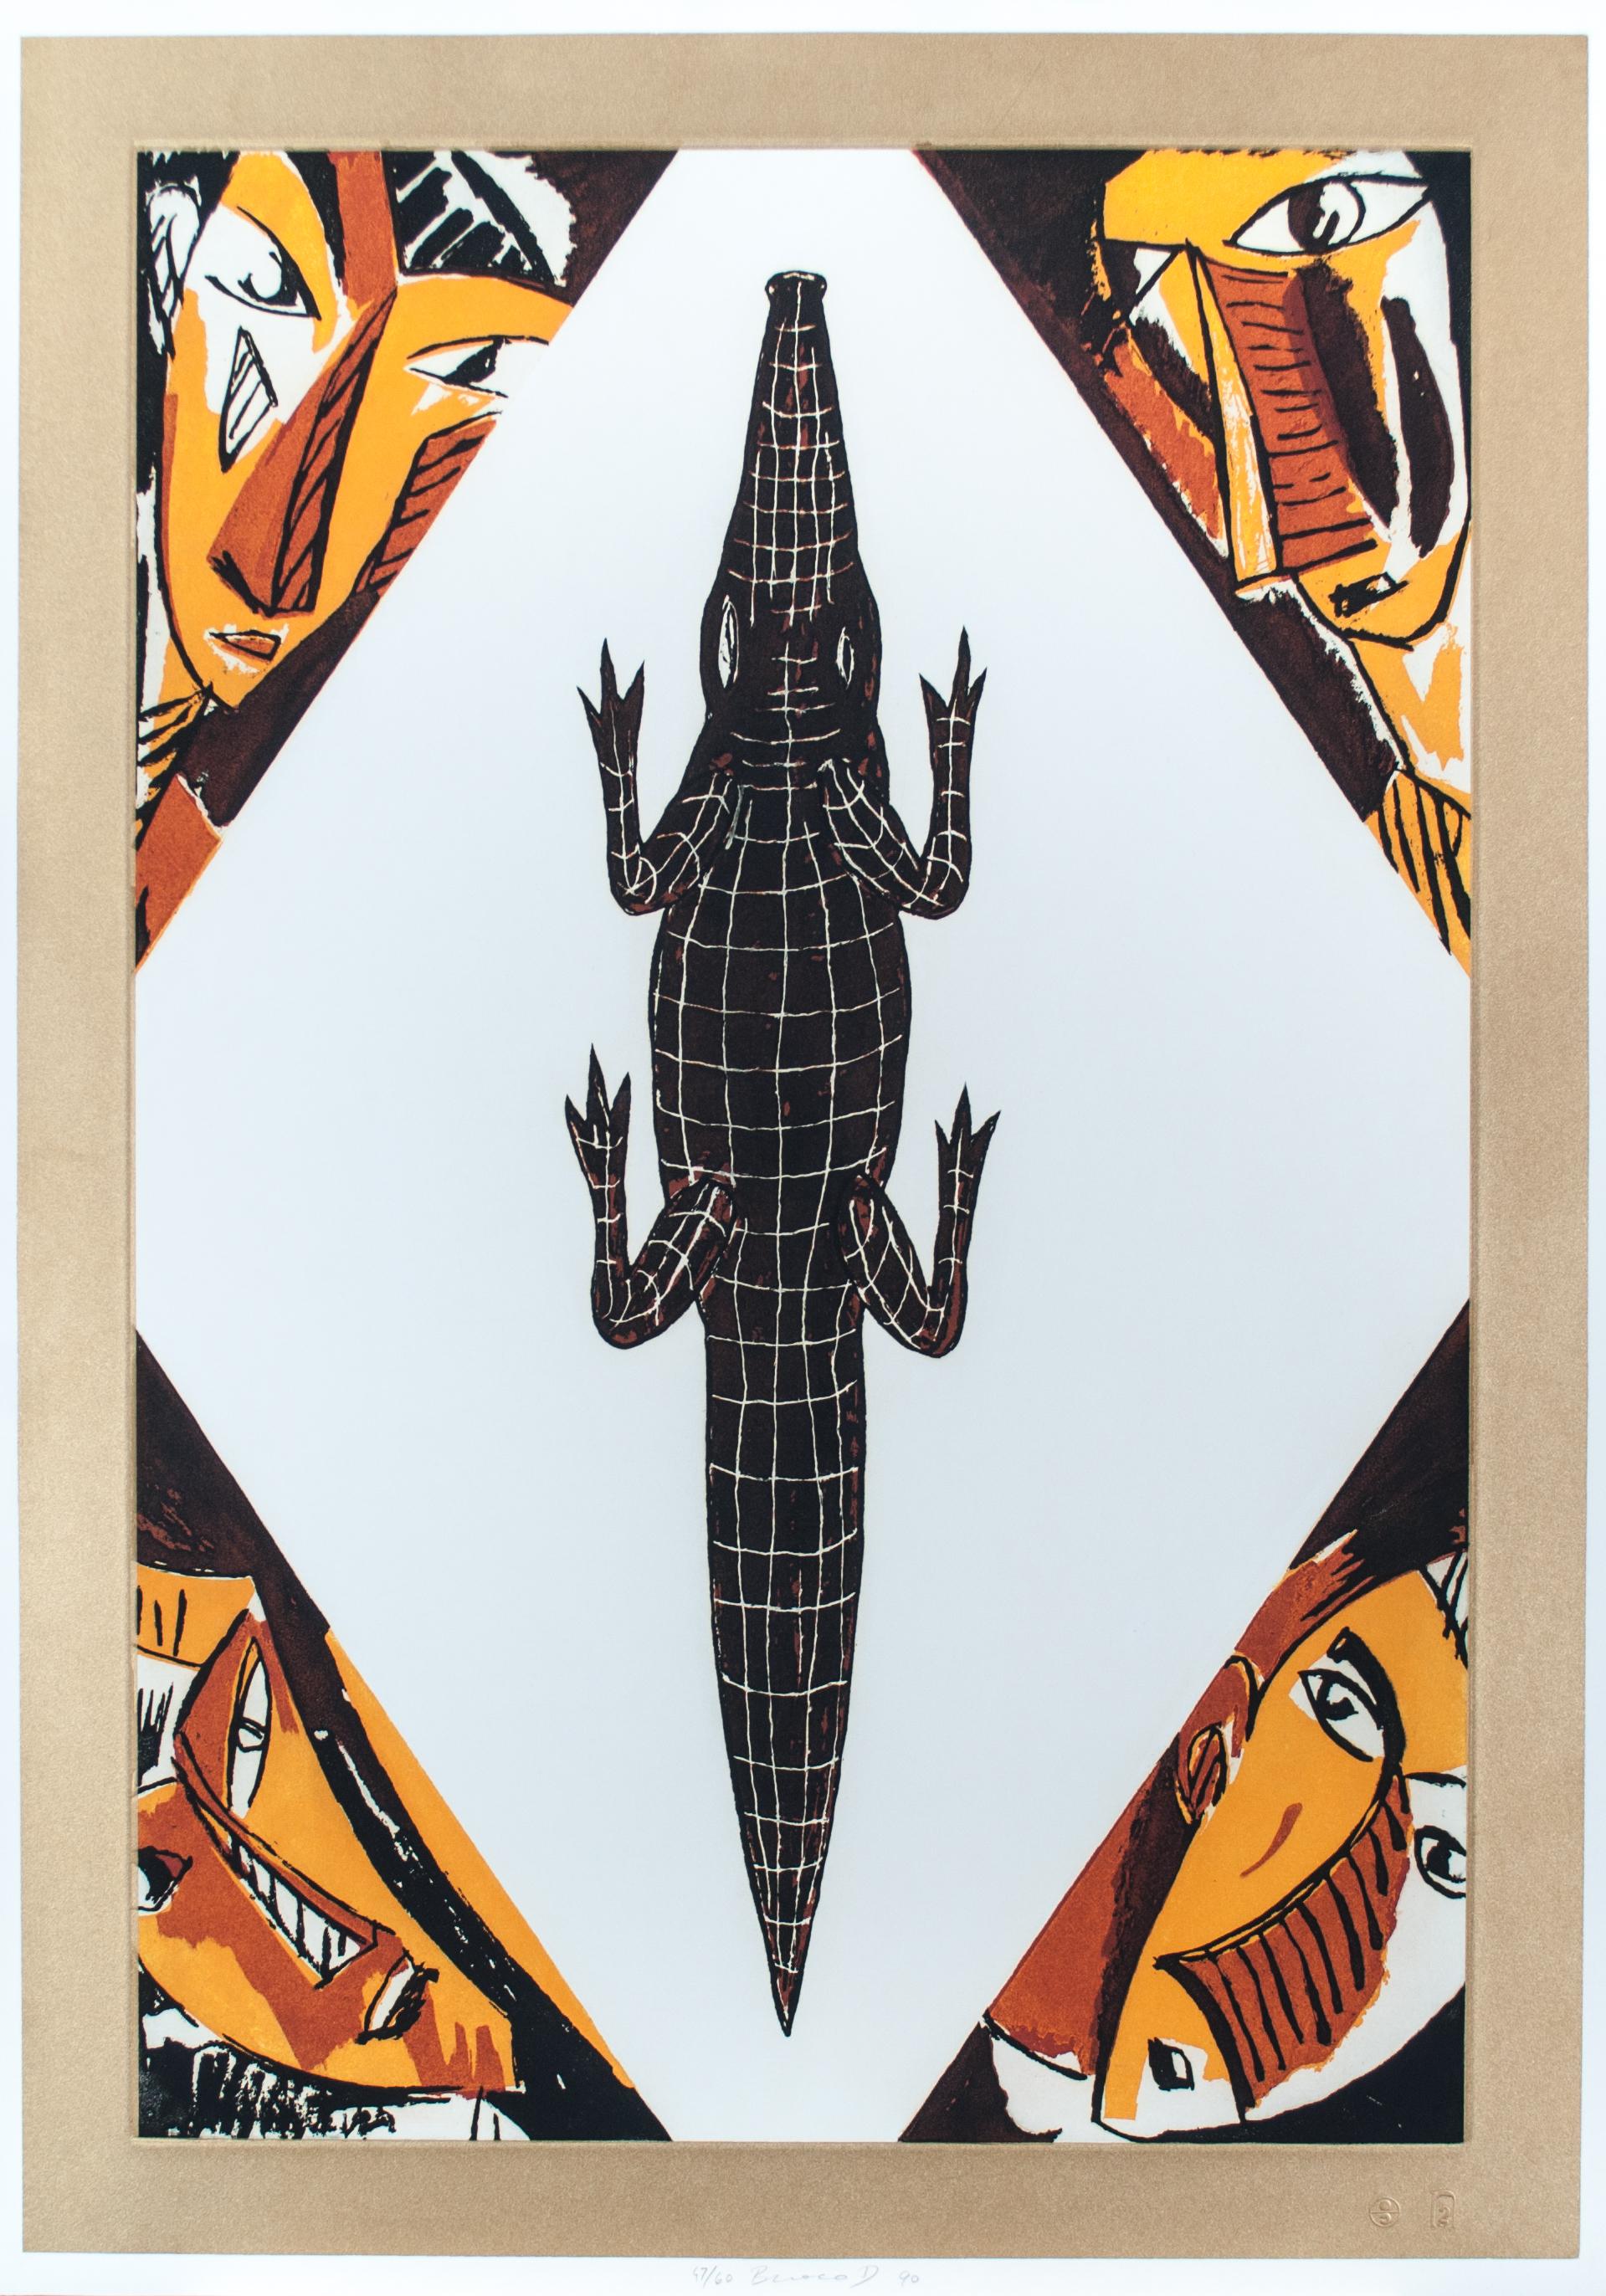 Animal Print Braco Dimitrijevich - Animaux autochtones (sacrés)